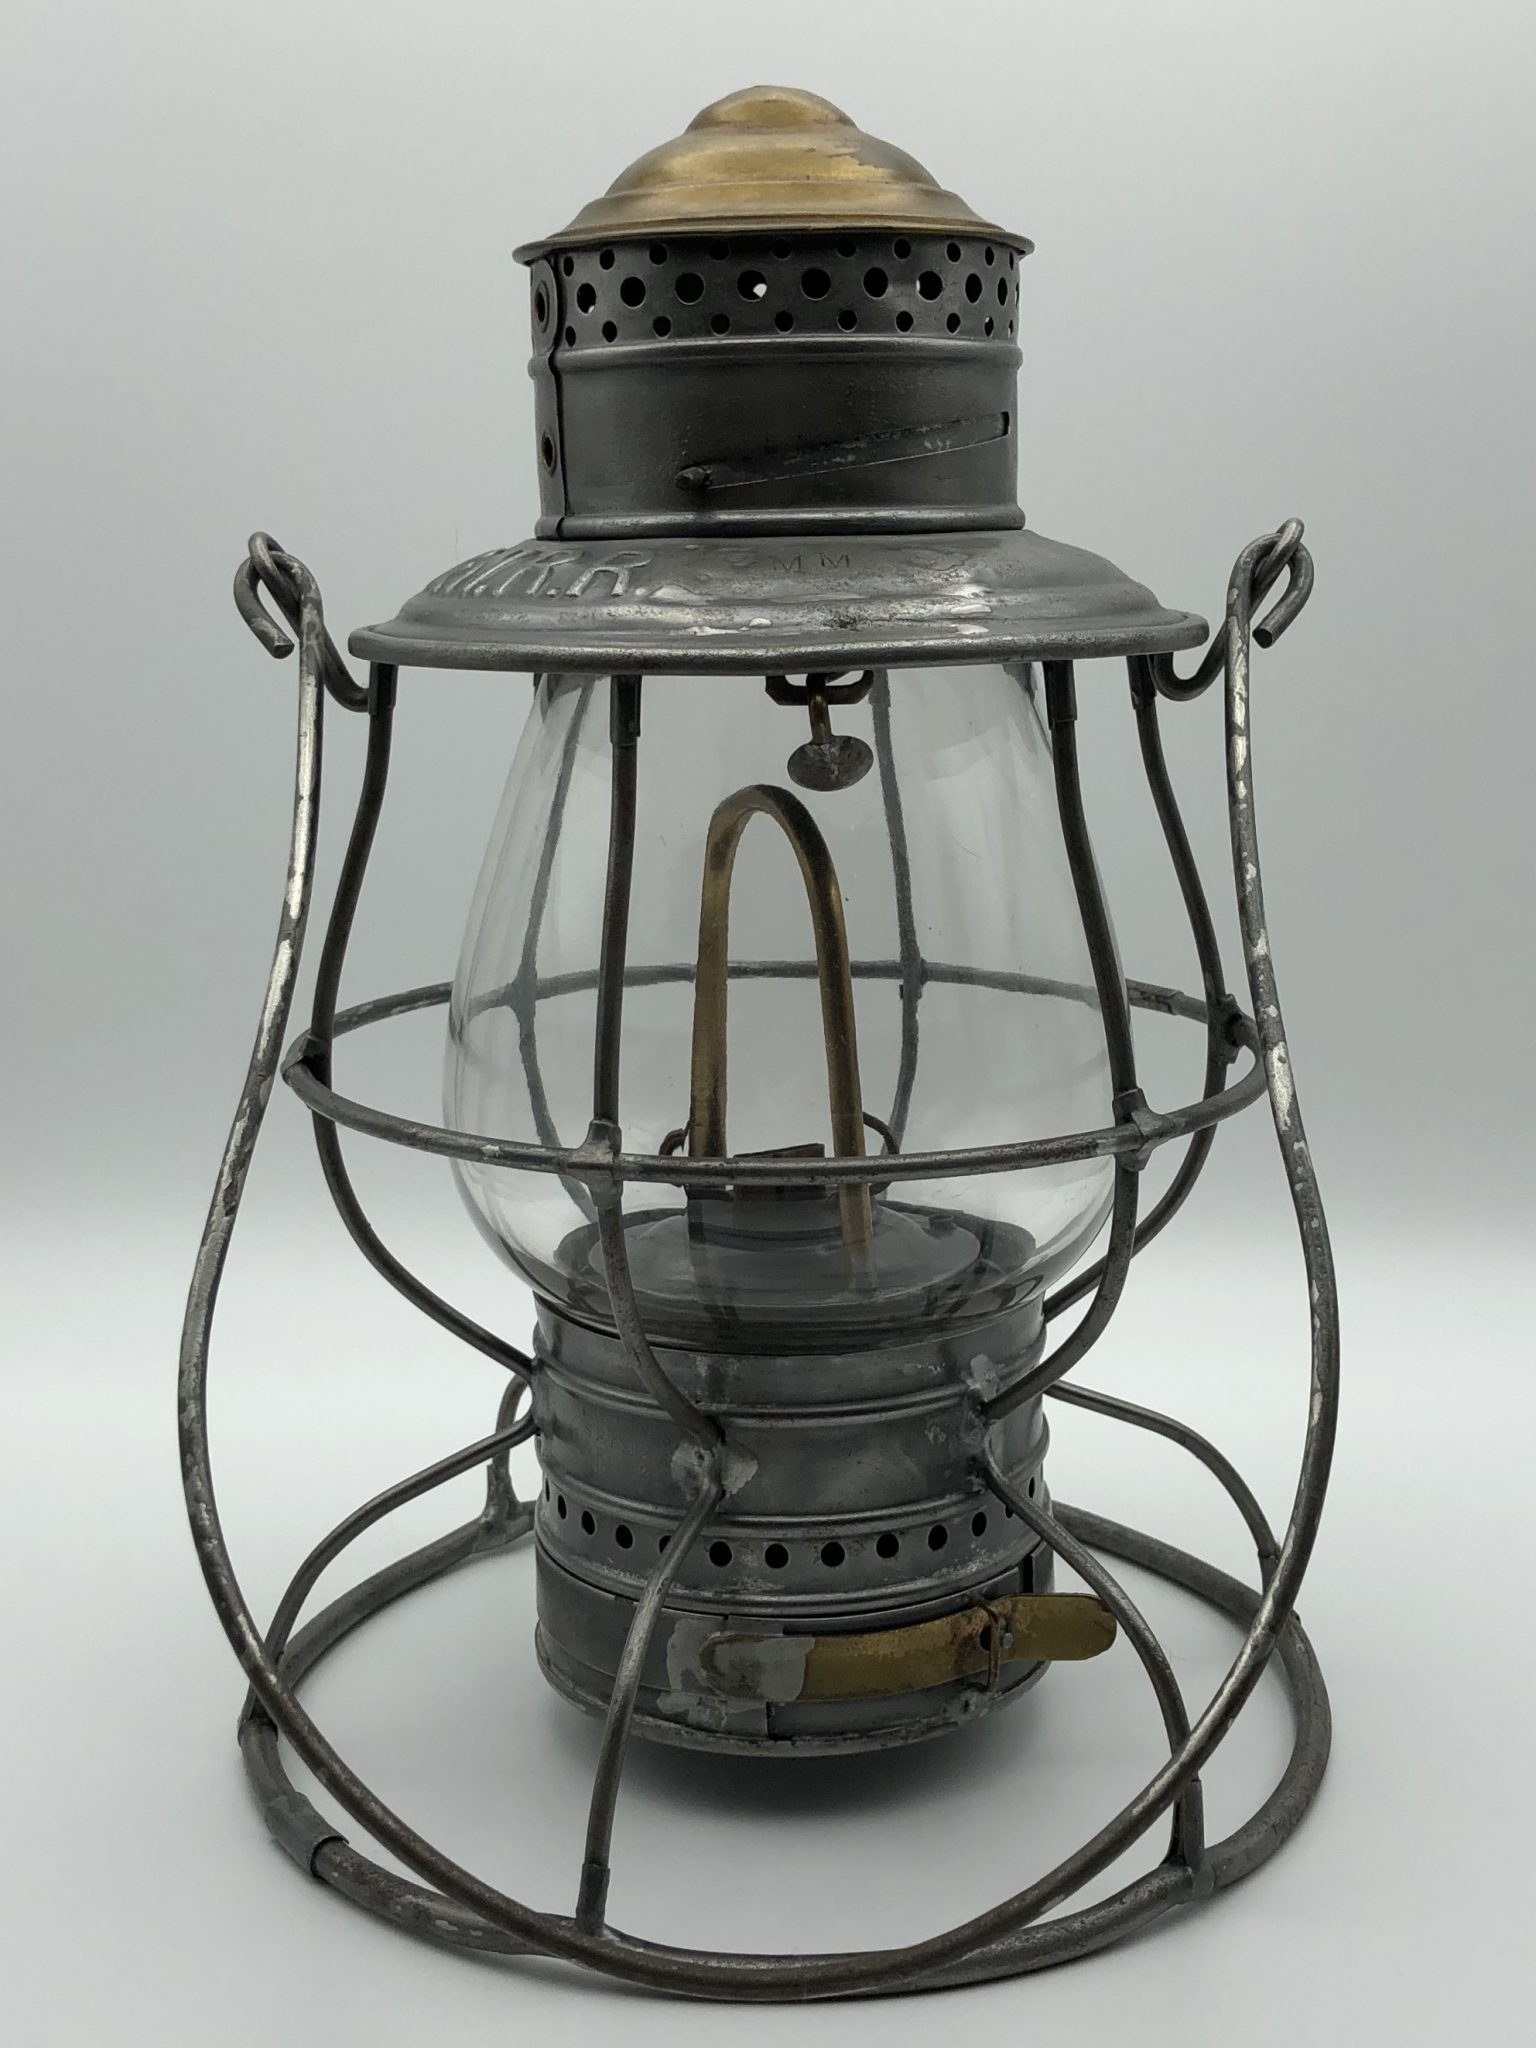 u&nrr railroad lantern-utah and northern railroad-utah railroad antique-railroadiana